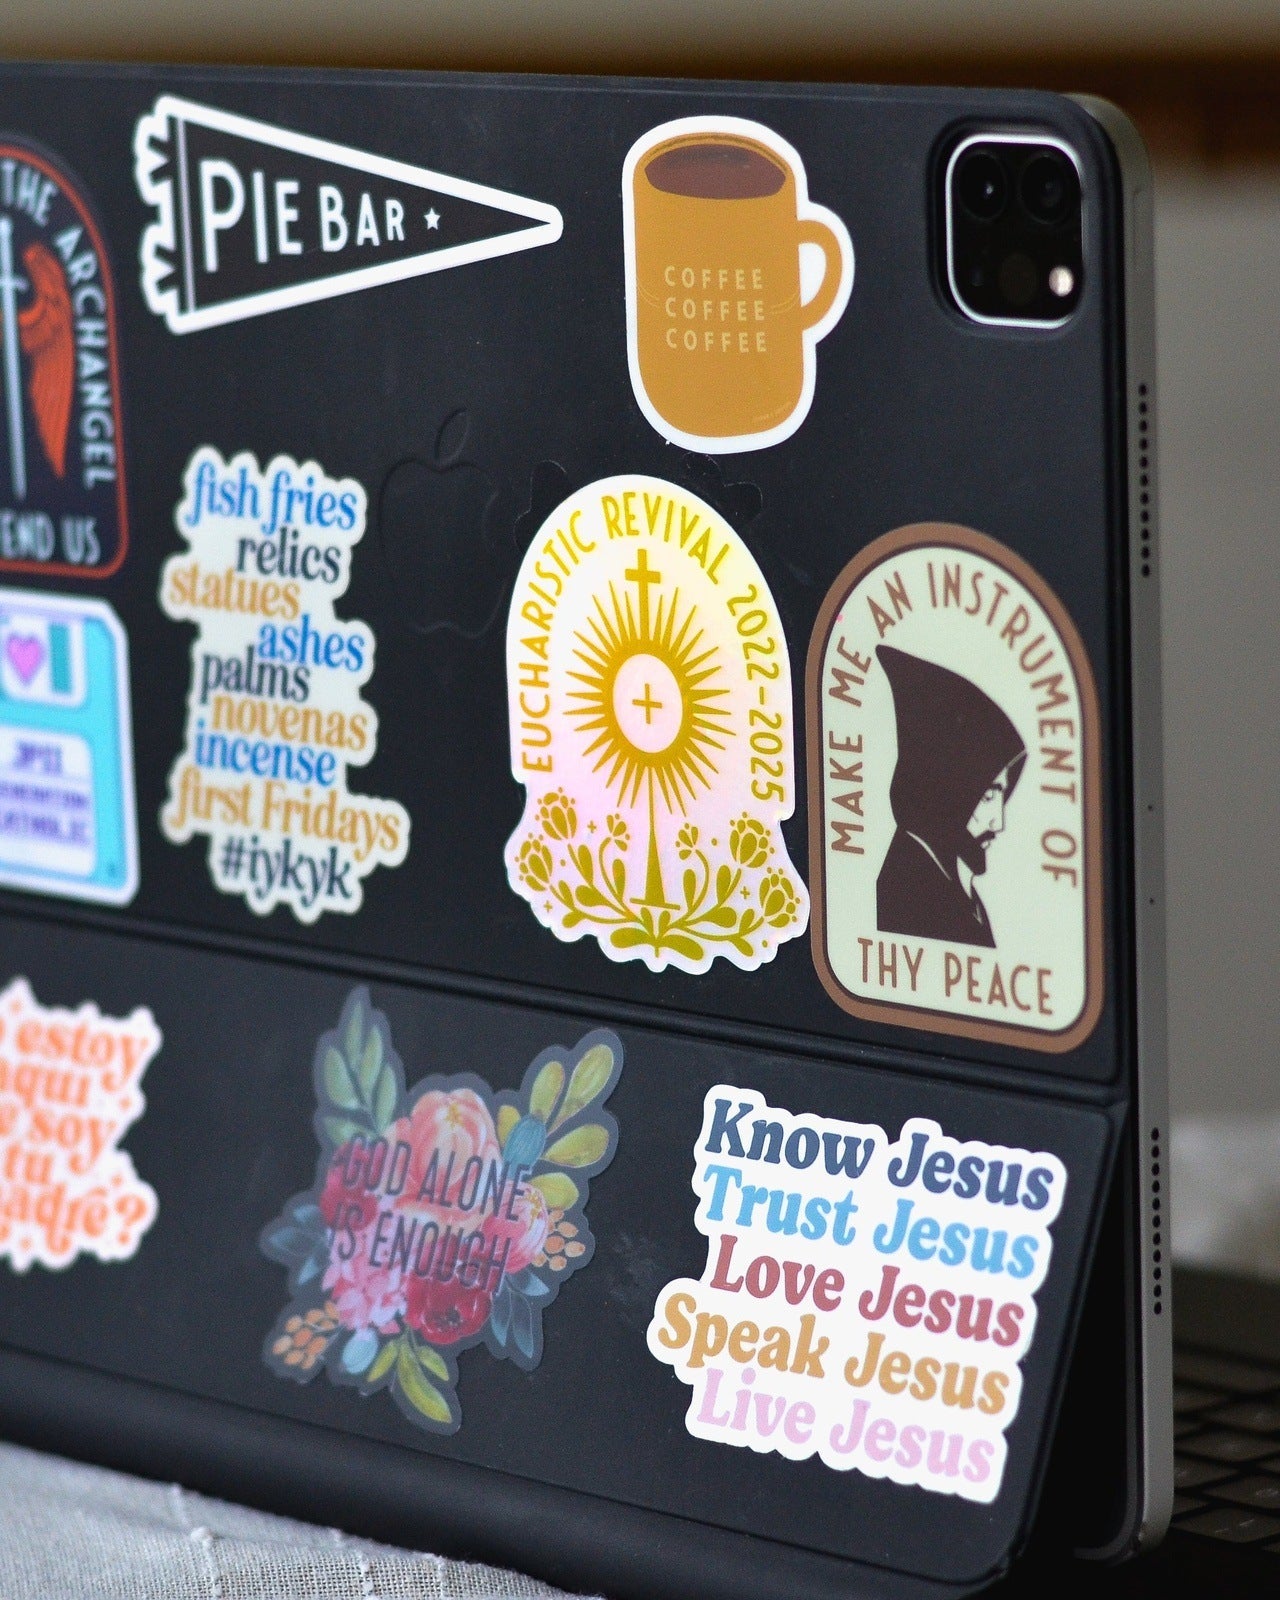 Eucharistic Revival Holographic Sticker - Little Way Design Co.